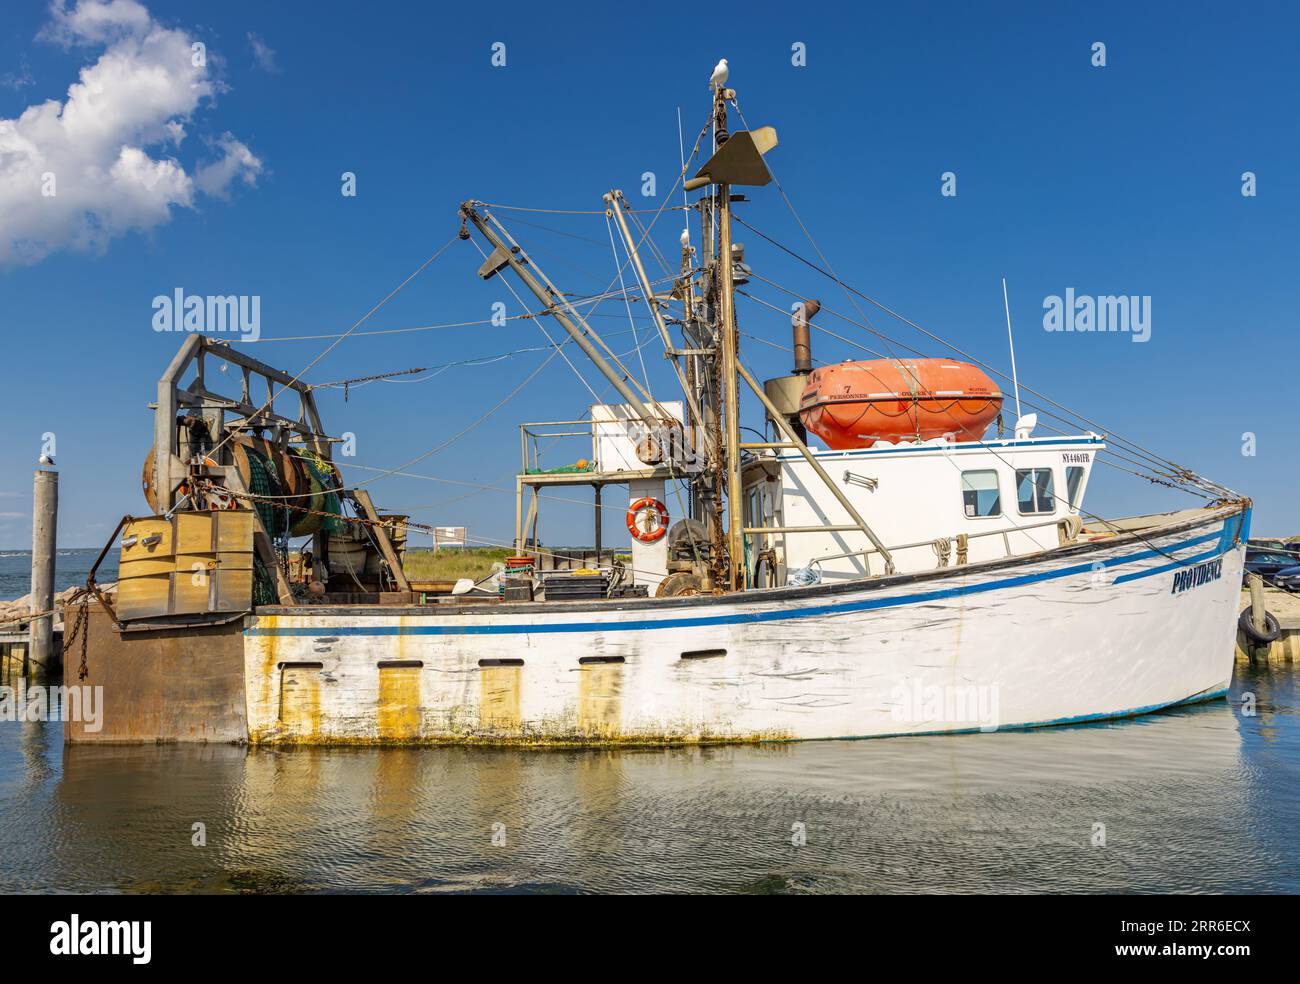 Commerical fishing vessel, Providence at dock in Hampton Bays, NY Stock Photo